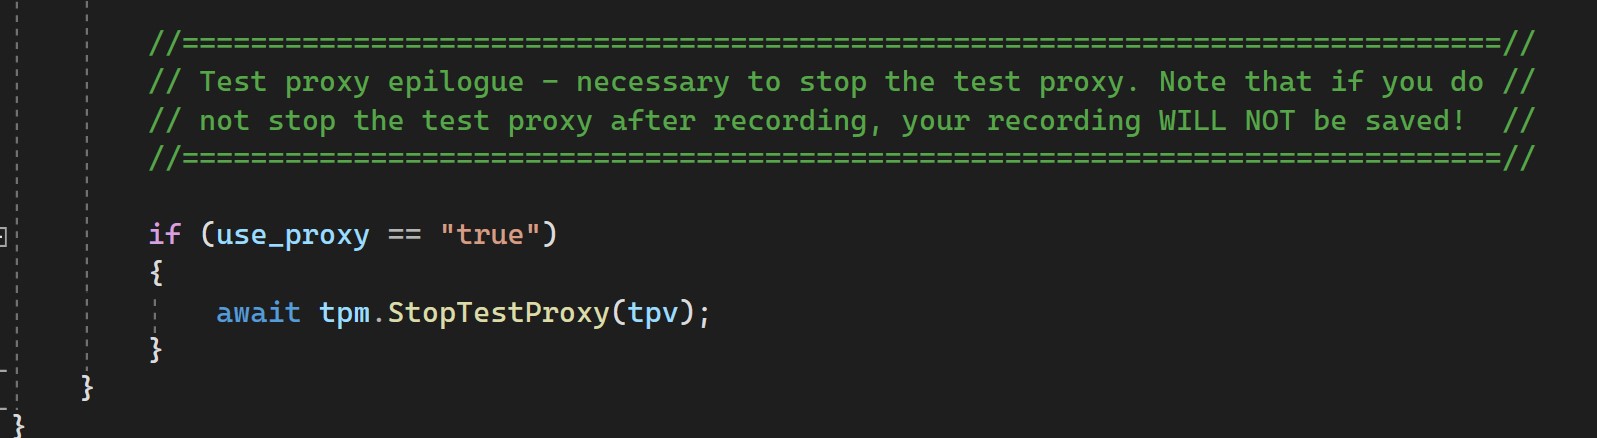 Test proxy epilogue code